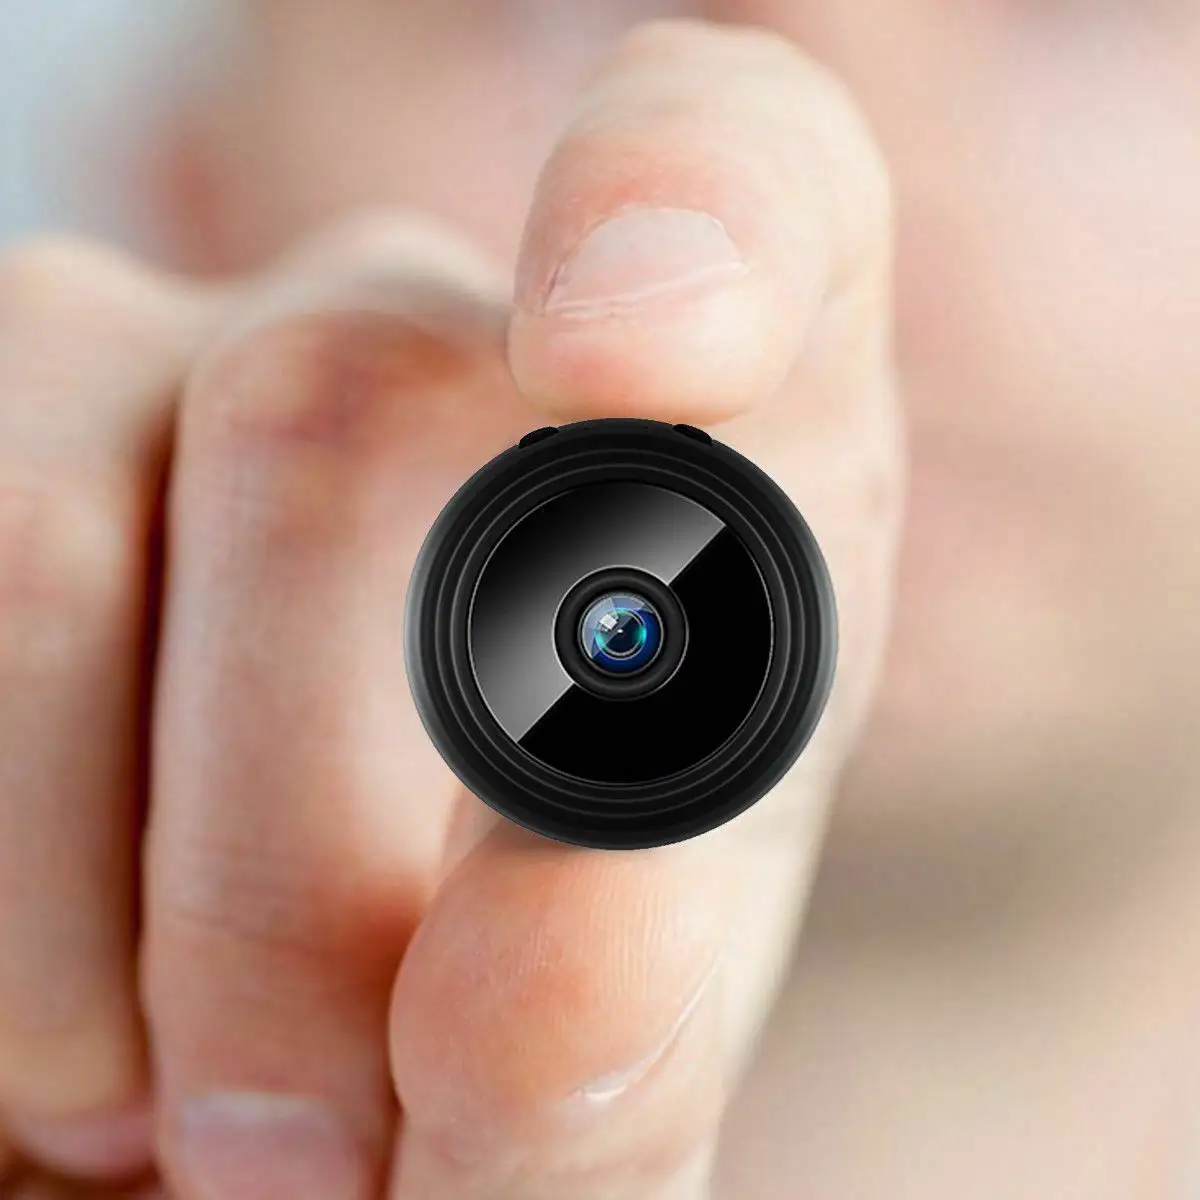 Hot Sales A9 Camera 1080p HD Resolution Super WiFi Camera For Home Security minicamera mini